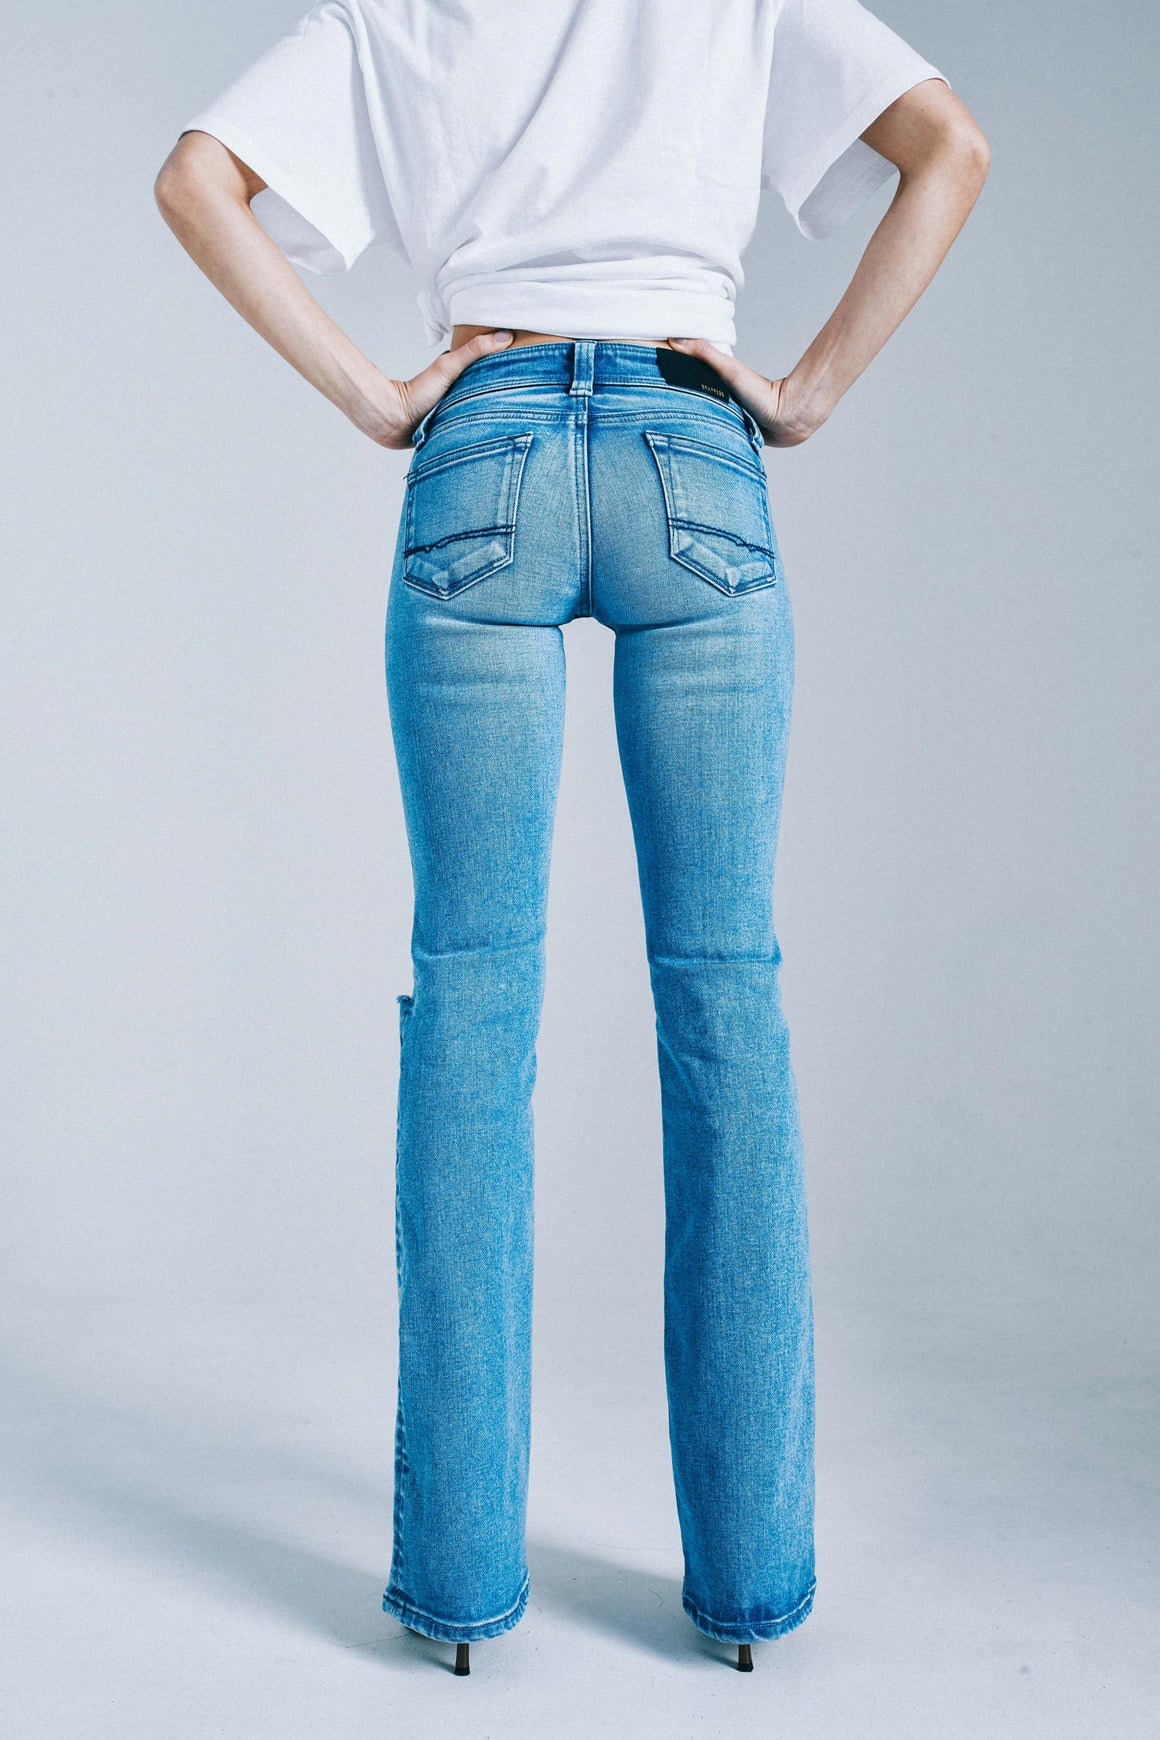 Pepe Jeans Womens Seamless Crop Top Bra KEIRA Dulwich Navy XS 2 Tops